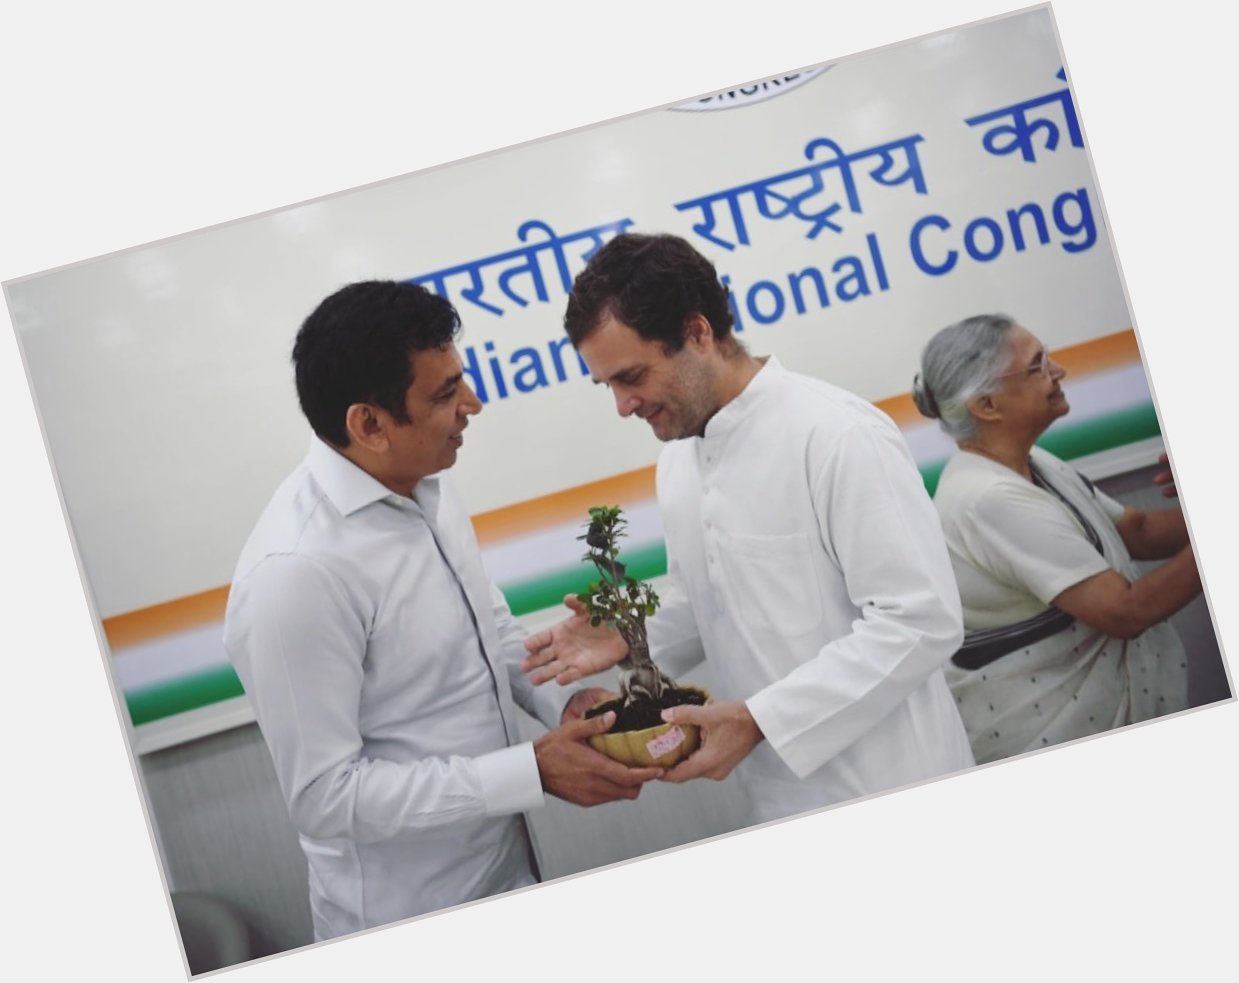 Met and Wished Rahul Gandhi  ji A Very Happy Birthday!!   